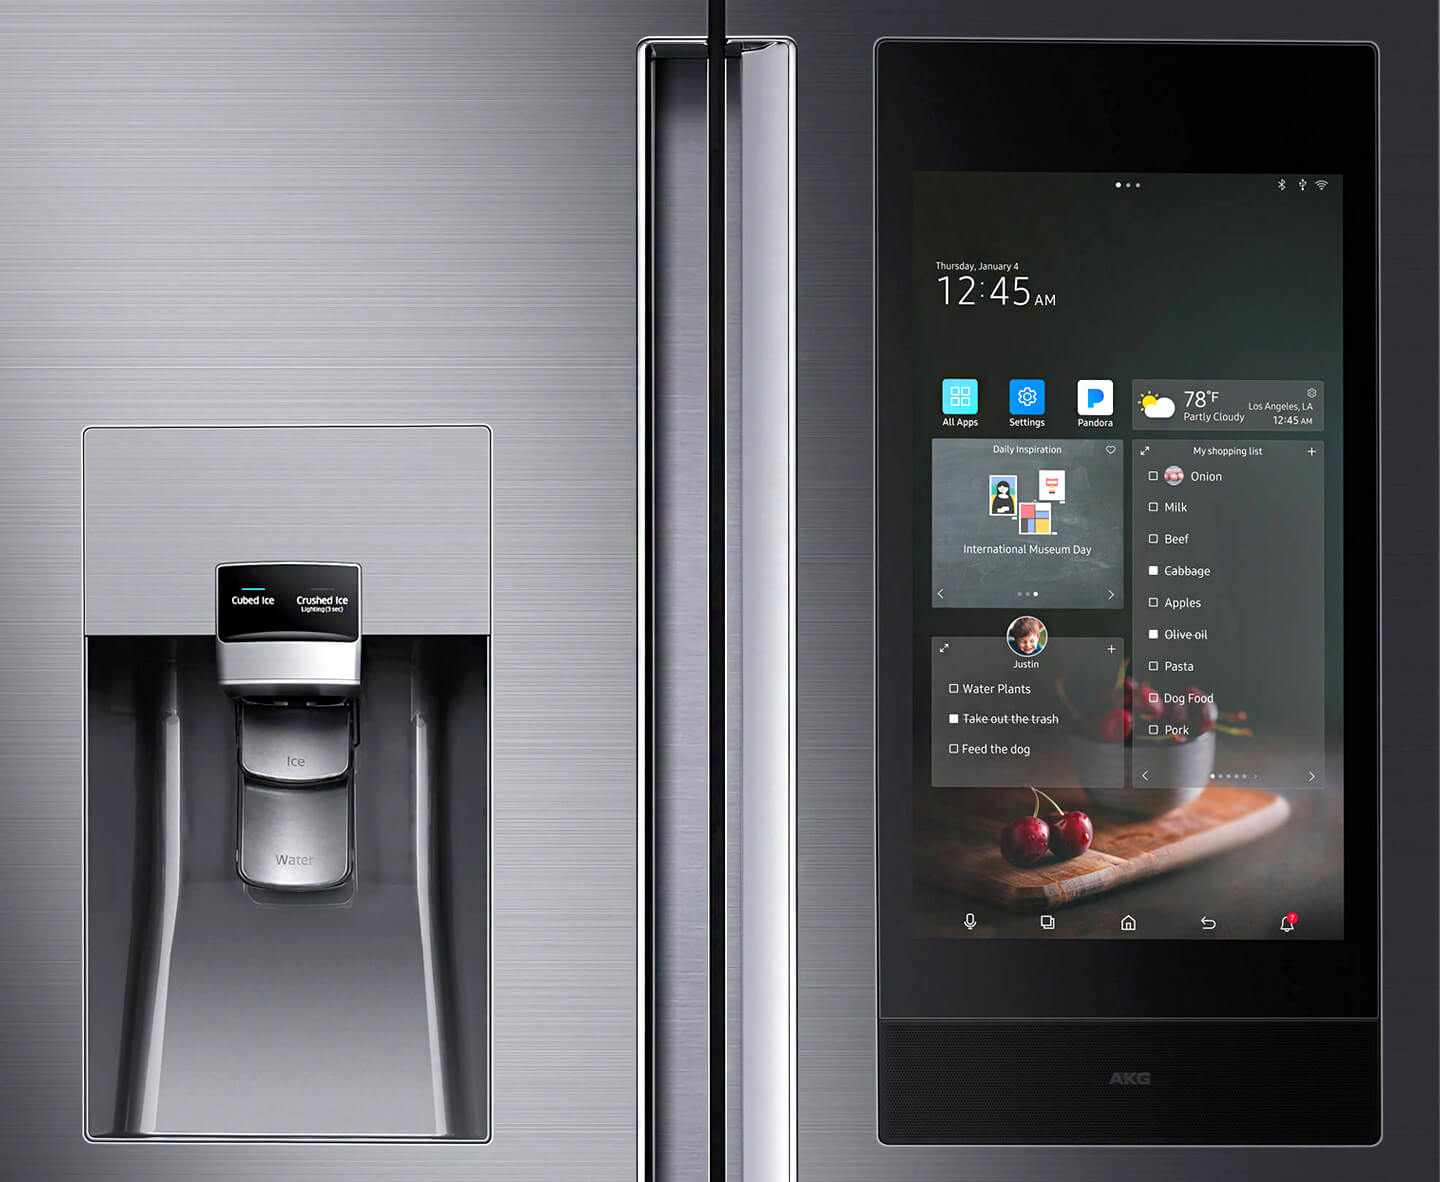 God Turbulentie ego Samsung koelkast met interactief touchscreen display | LetsGoDigital